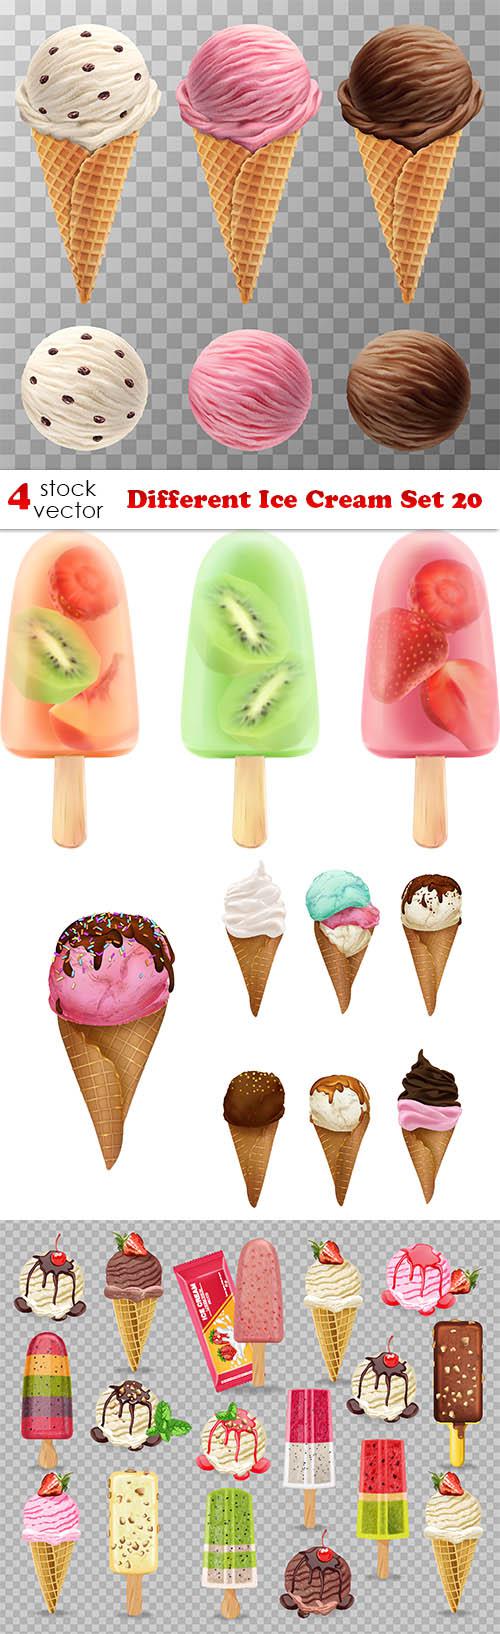 Different Ice Cream Set 20